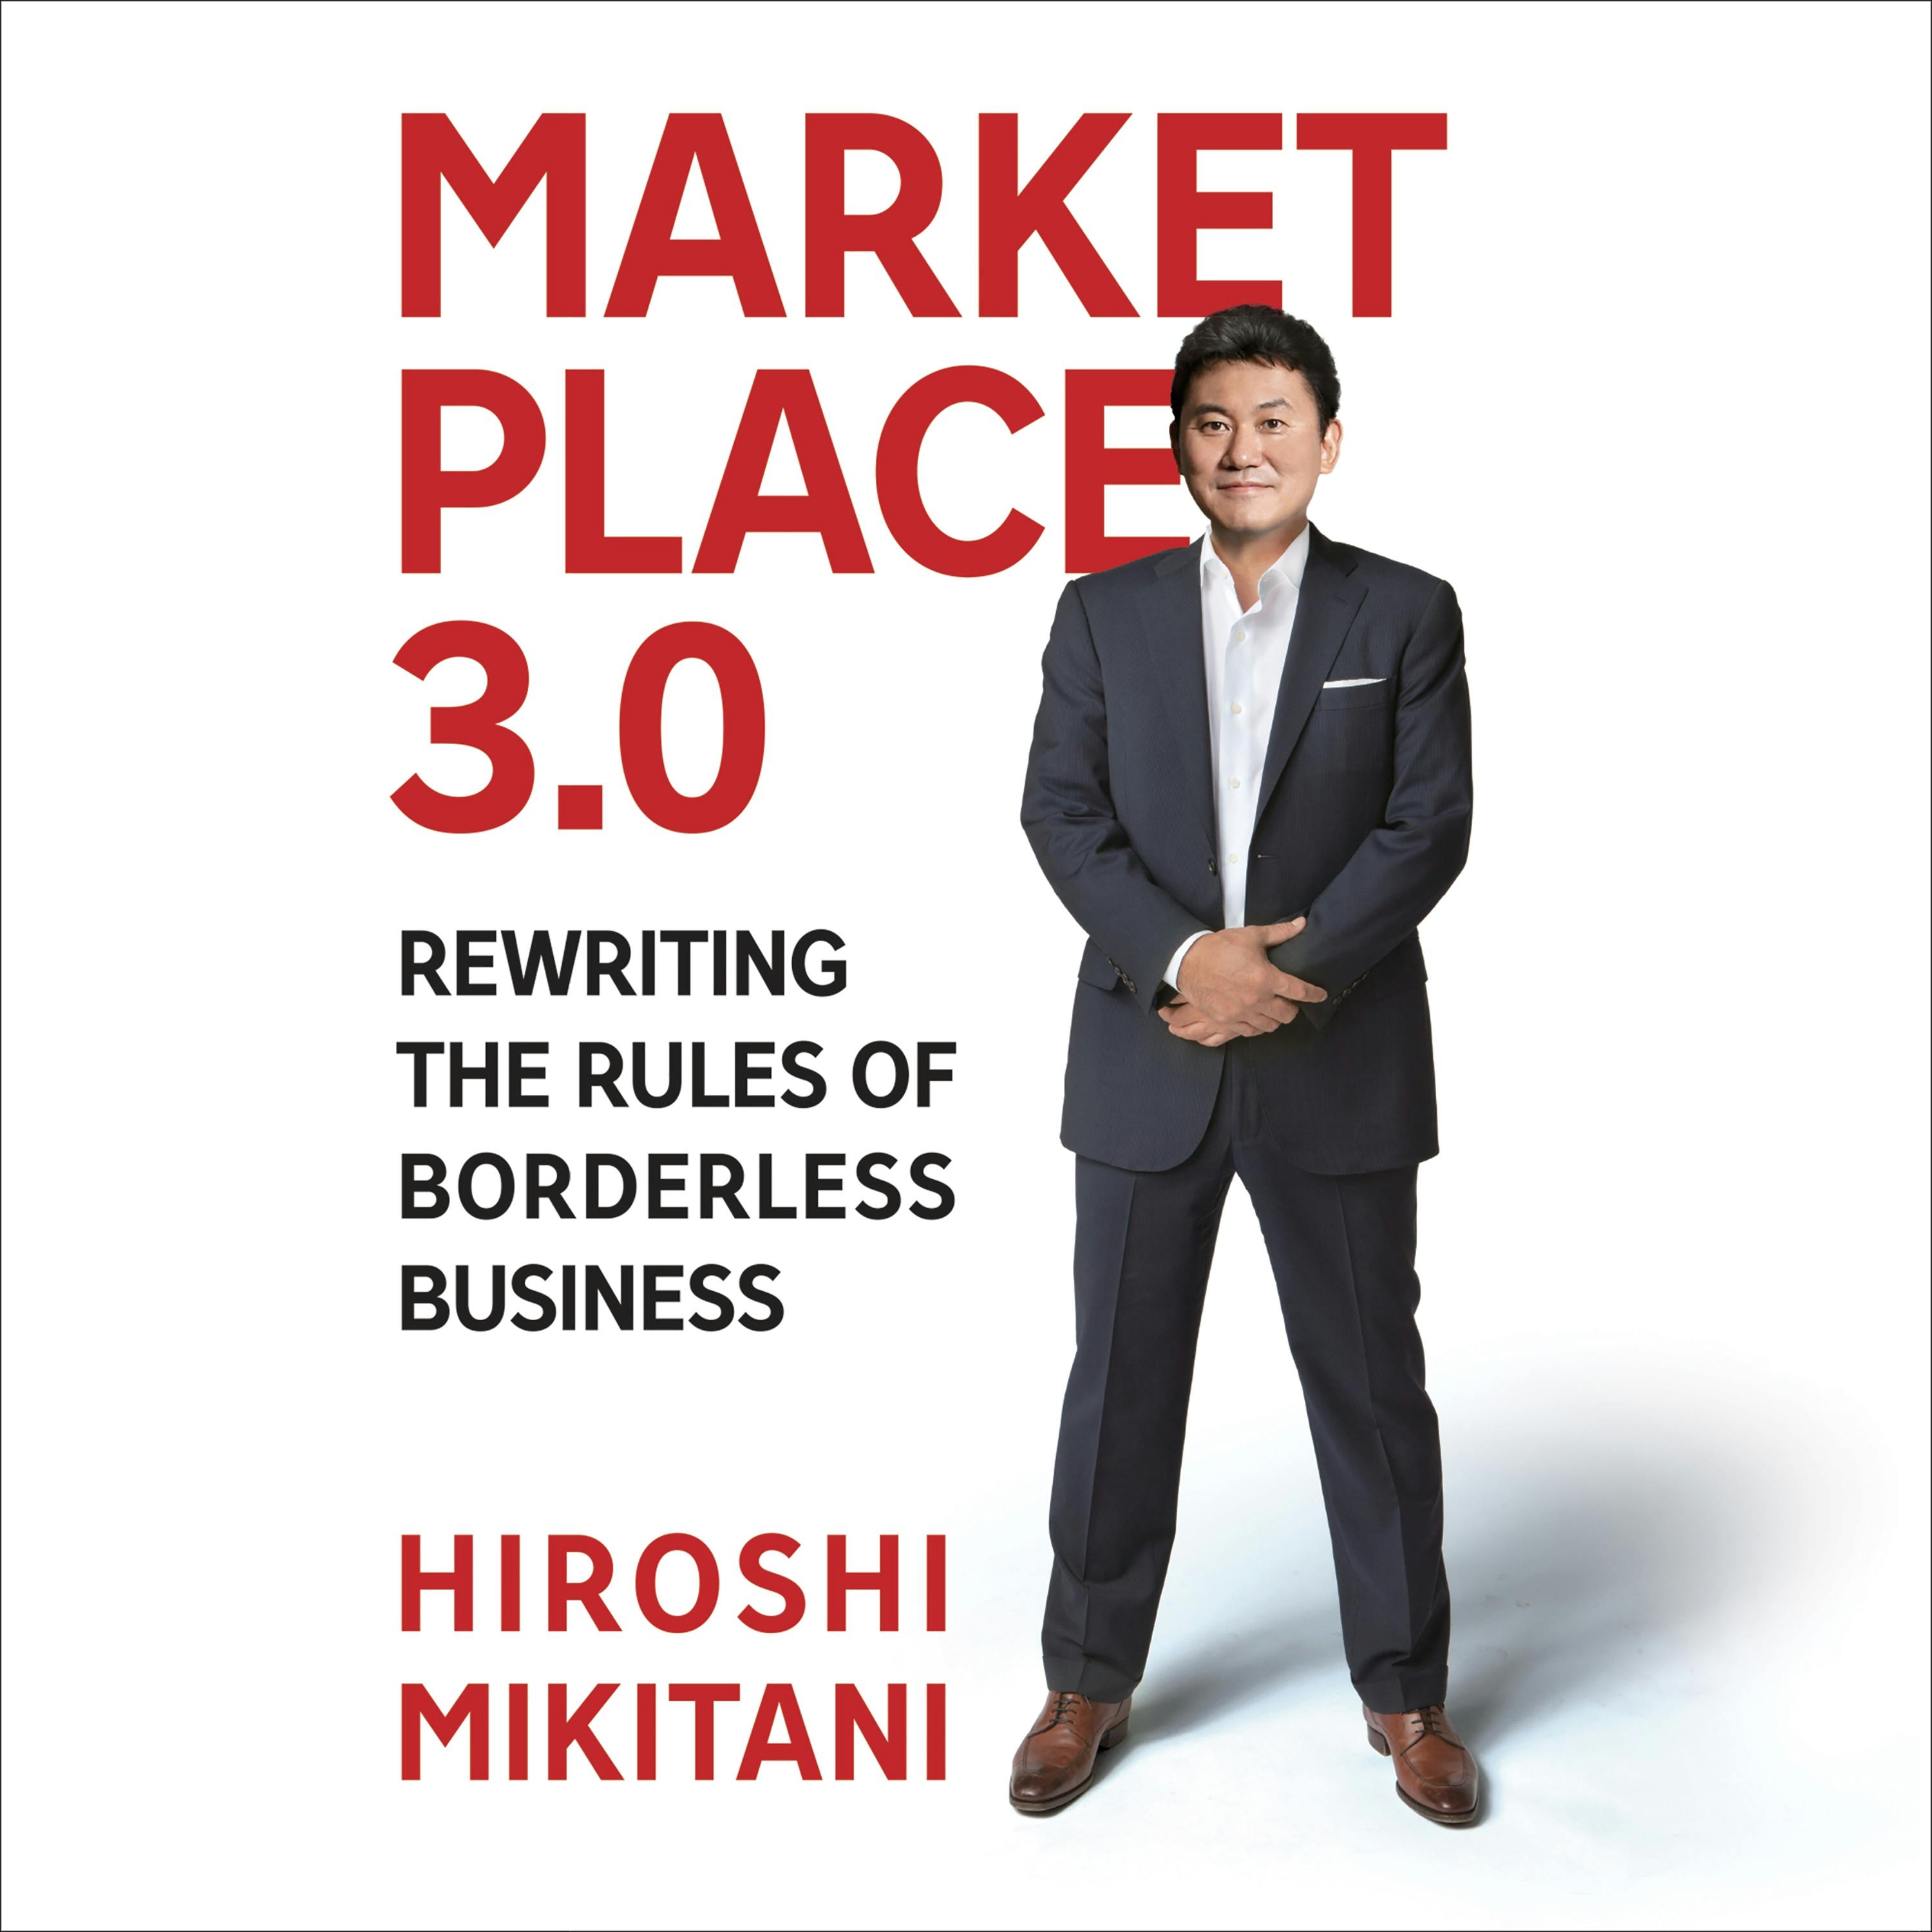 Marketplace 3.0: Rewriting the Rules for Borderless Business - Hiroshi Mikitani